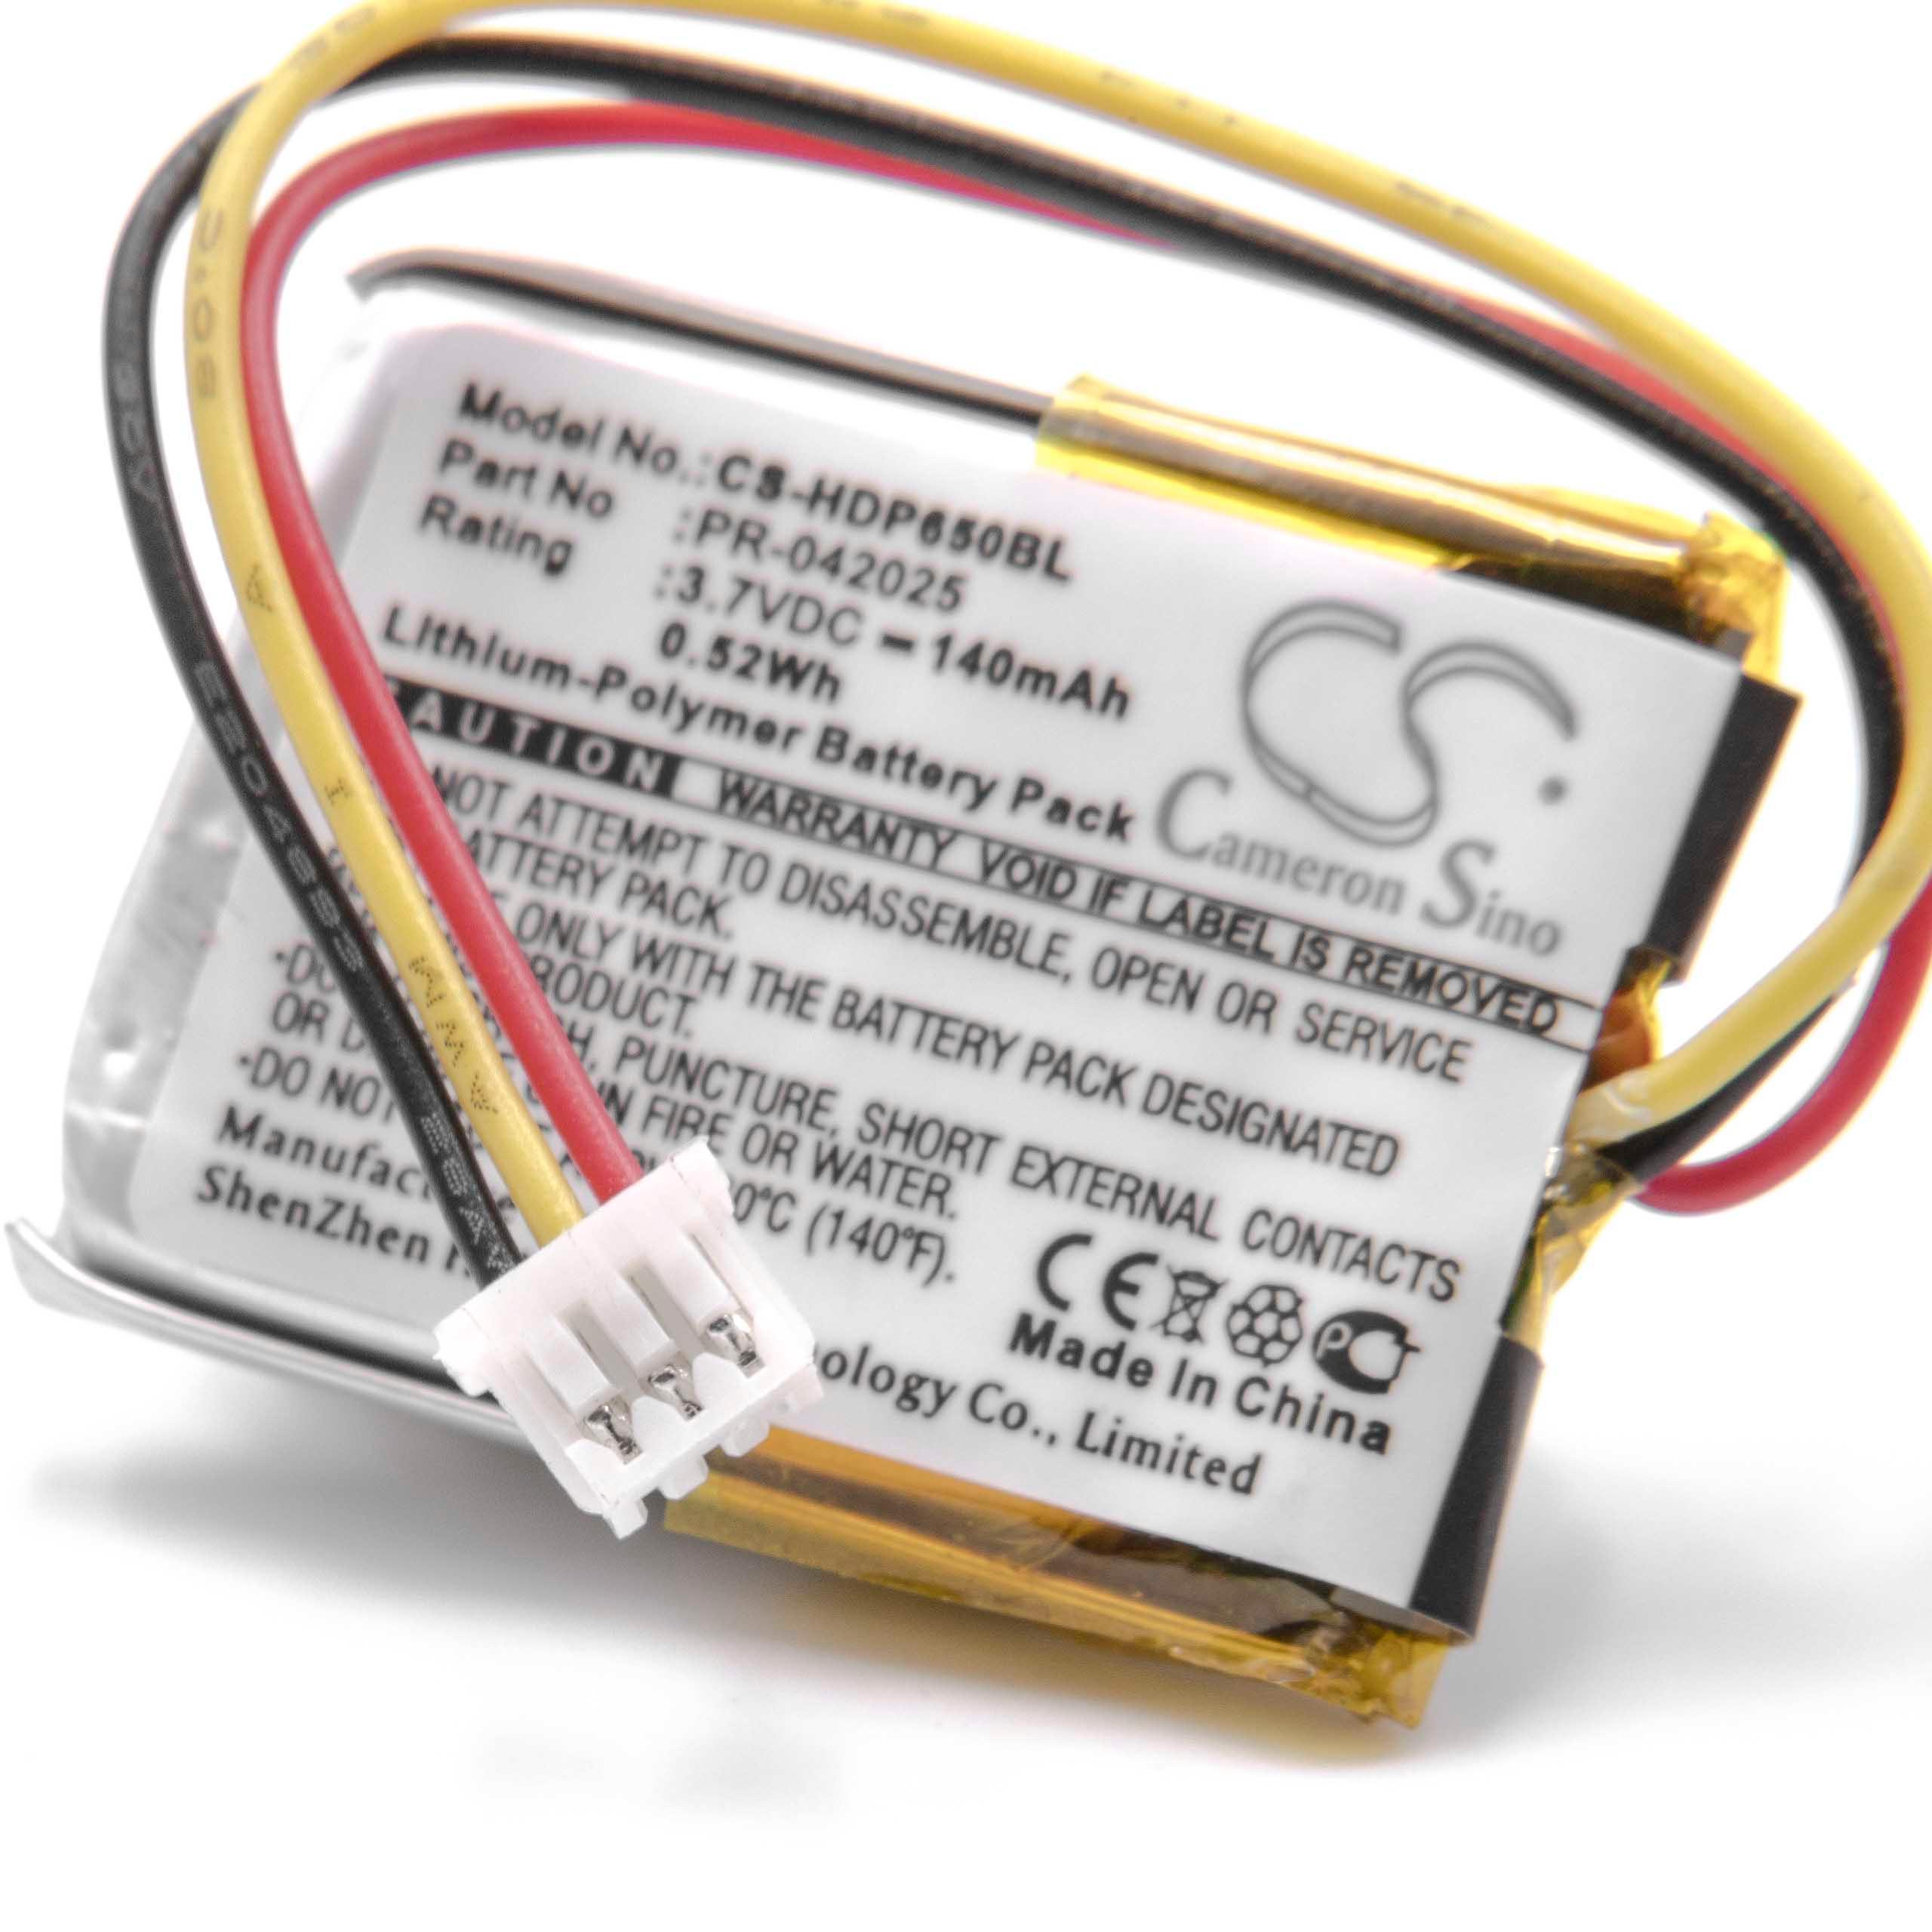 Barcode Scanner POS Battery Replacement for Honeywell PR-042025 - 140mAh 3.7V Li-polymer